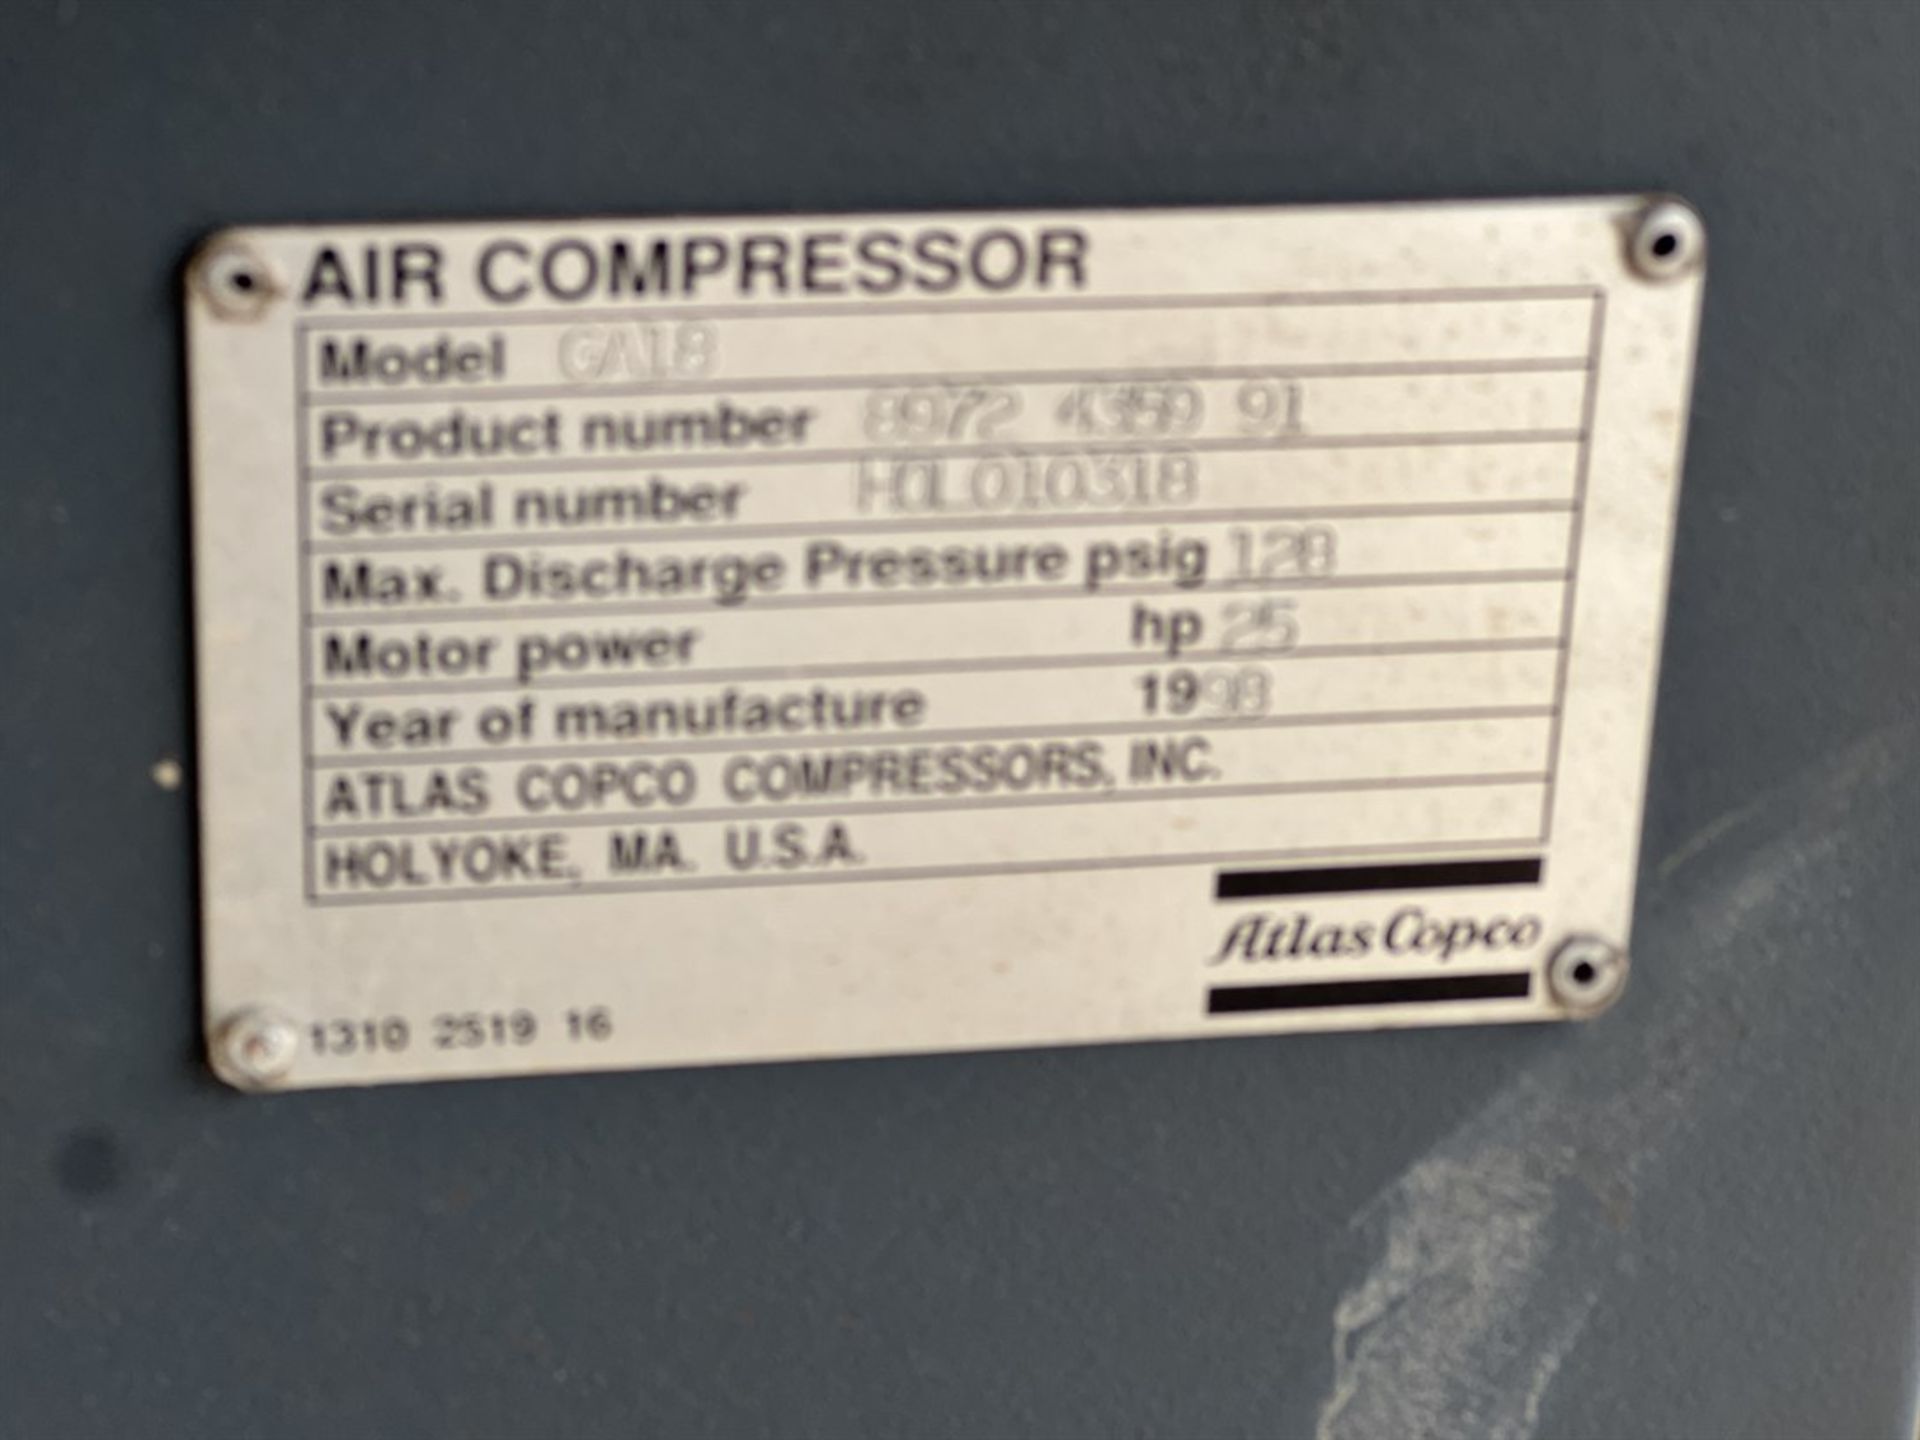 ATLAS COPCO GA18 Rotary Screw Air Compressor, s/n HCL010318, 25 HP - Image 3 of 3